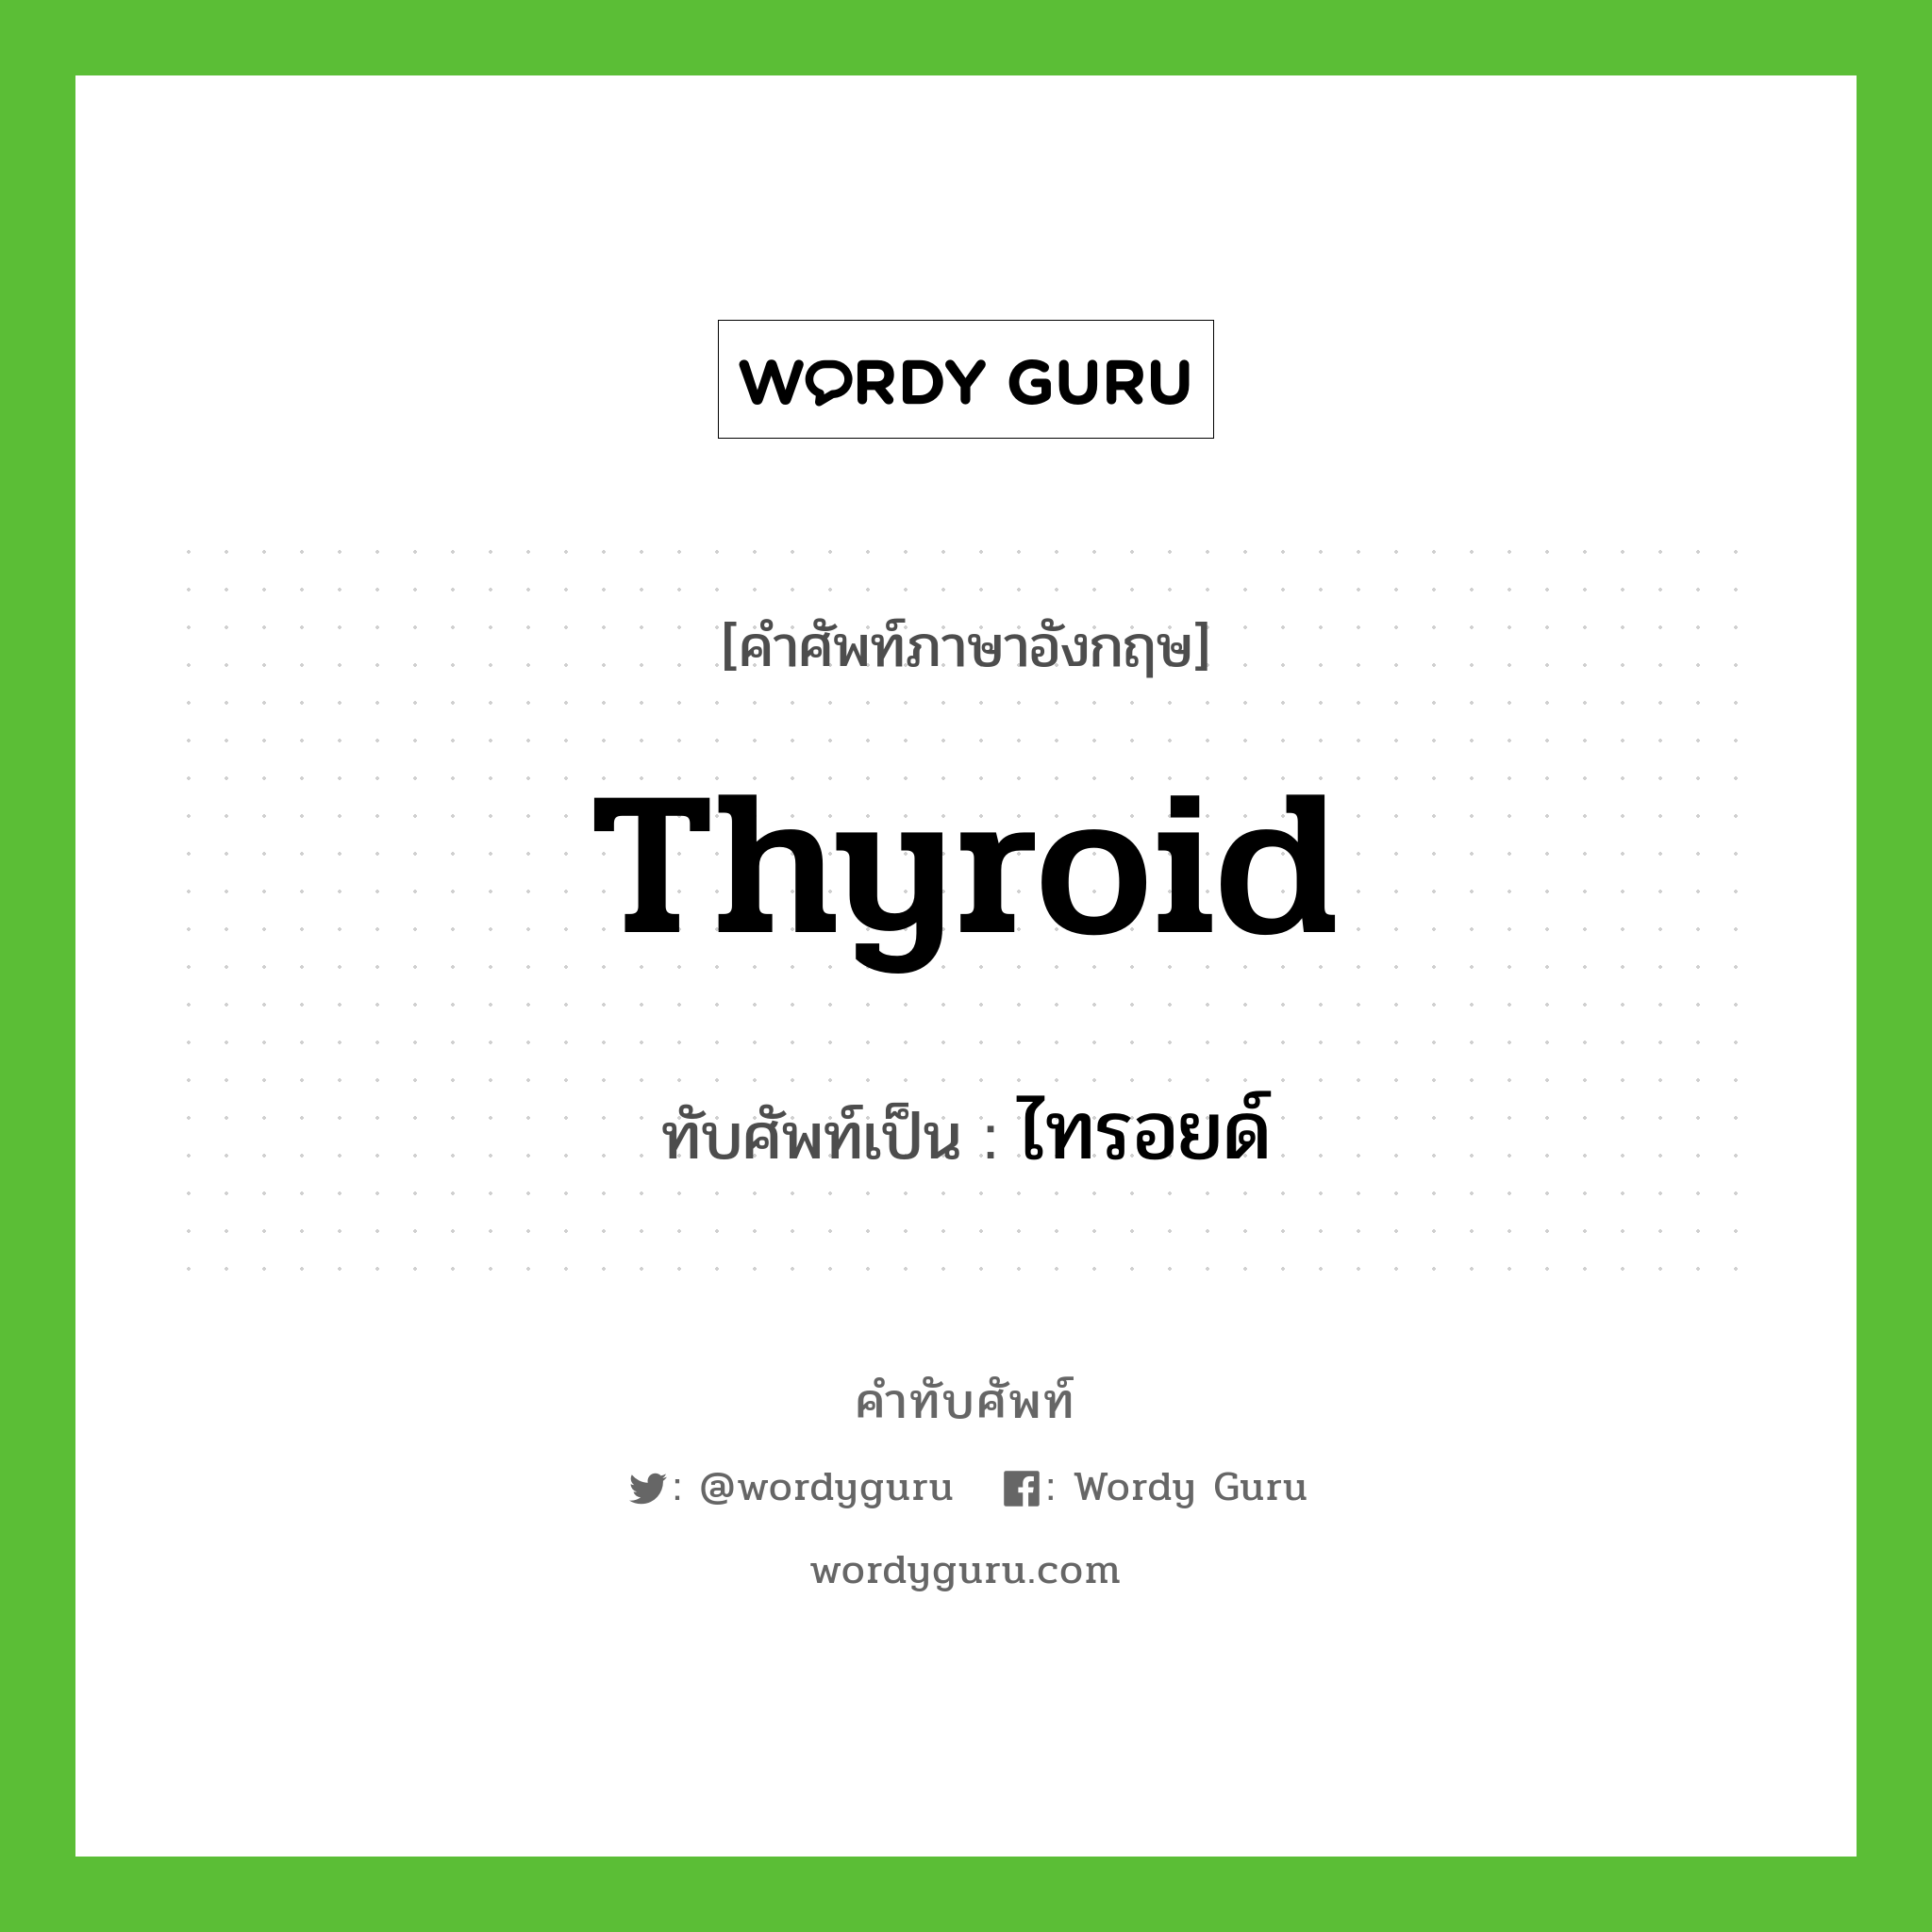 thyroid เขียนเป็นคำไทยว่าอะไร?, คำศัพท์ภาษาอังกฤษ thyroid ทับศัพท์เป็น ไทรอยด์